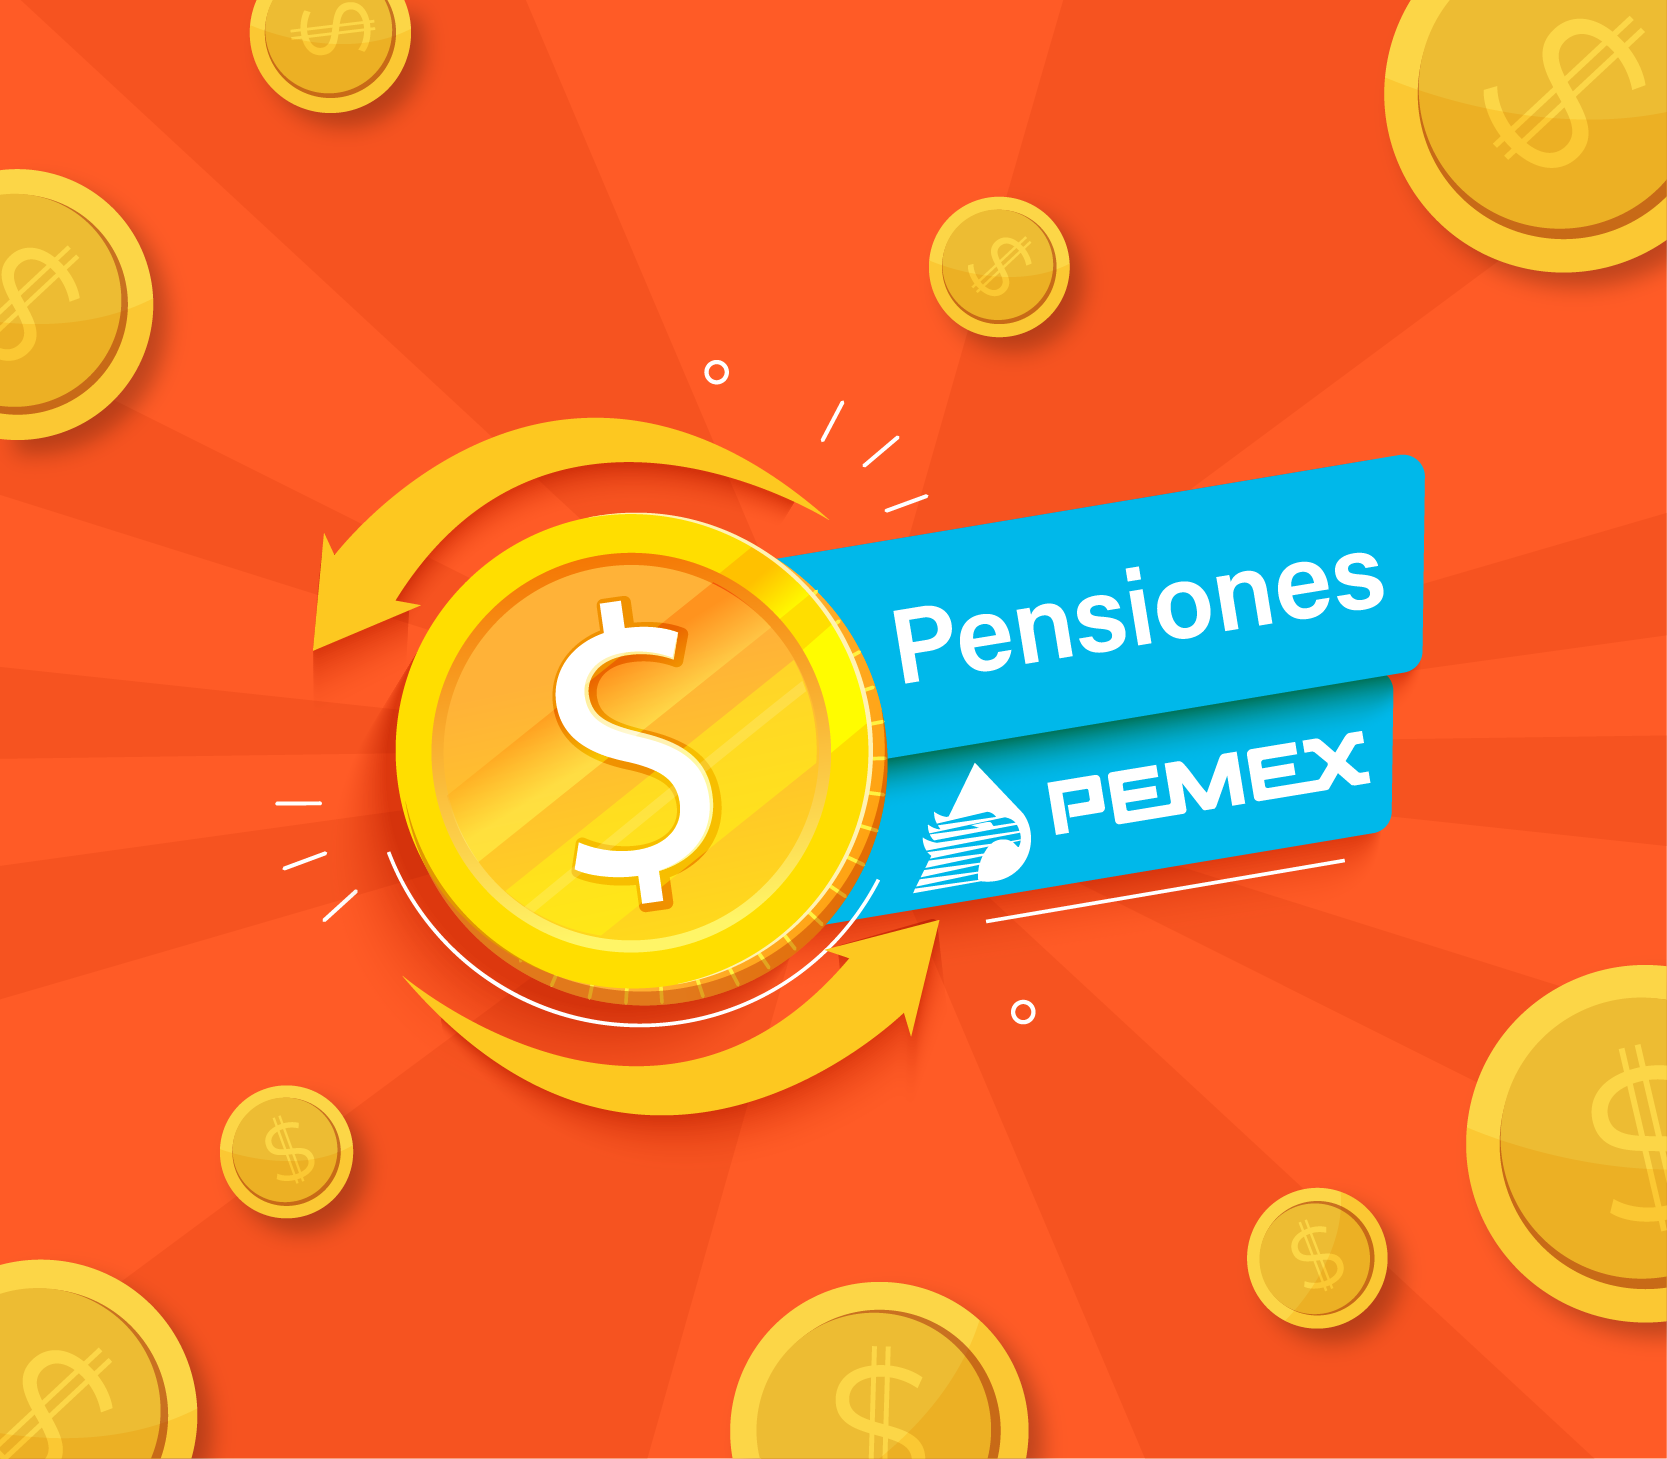 pensiones pemex